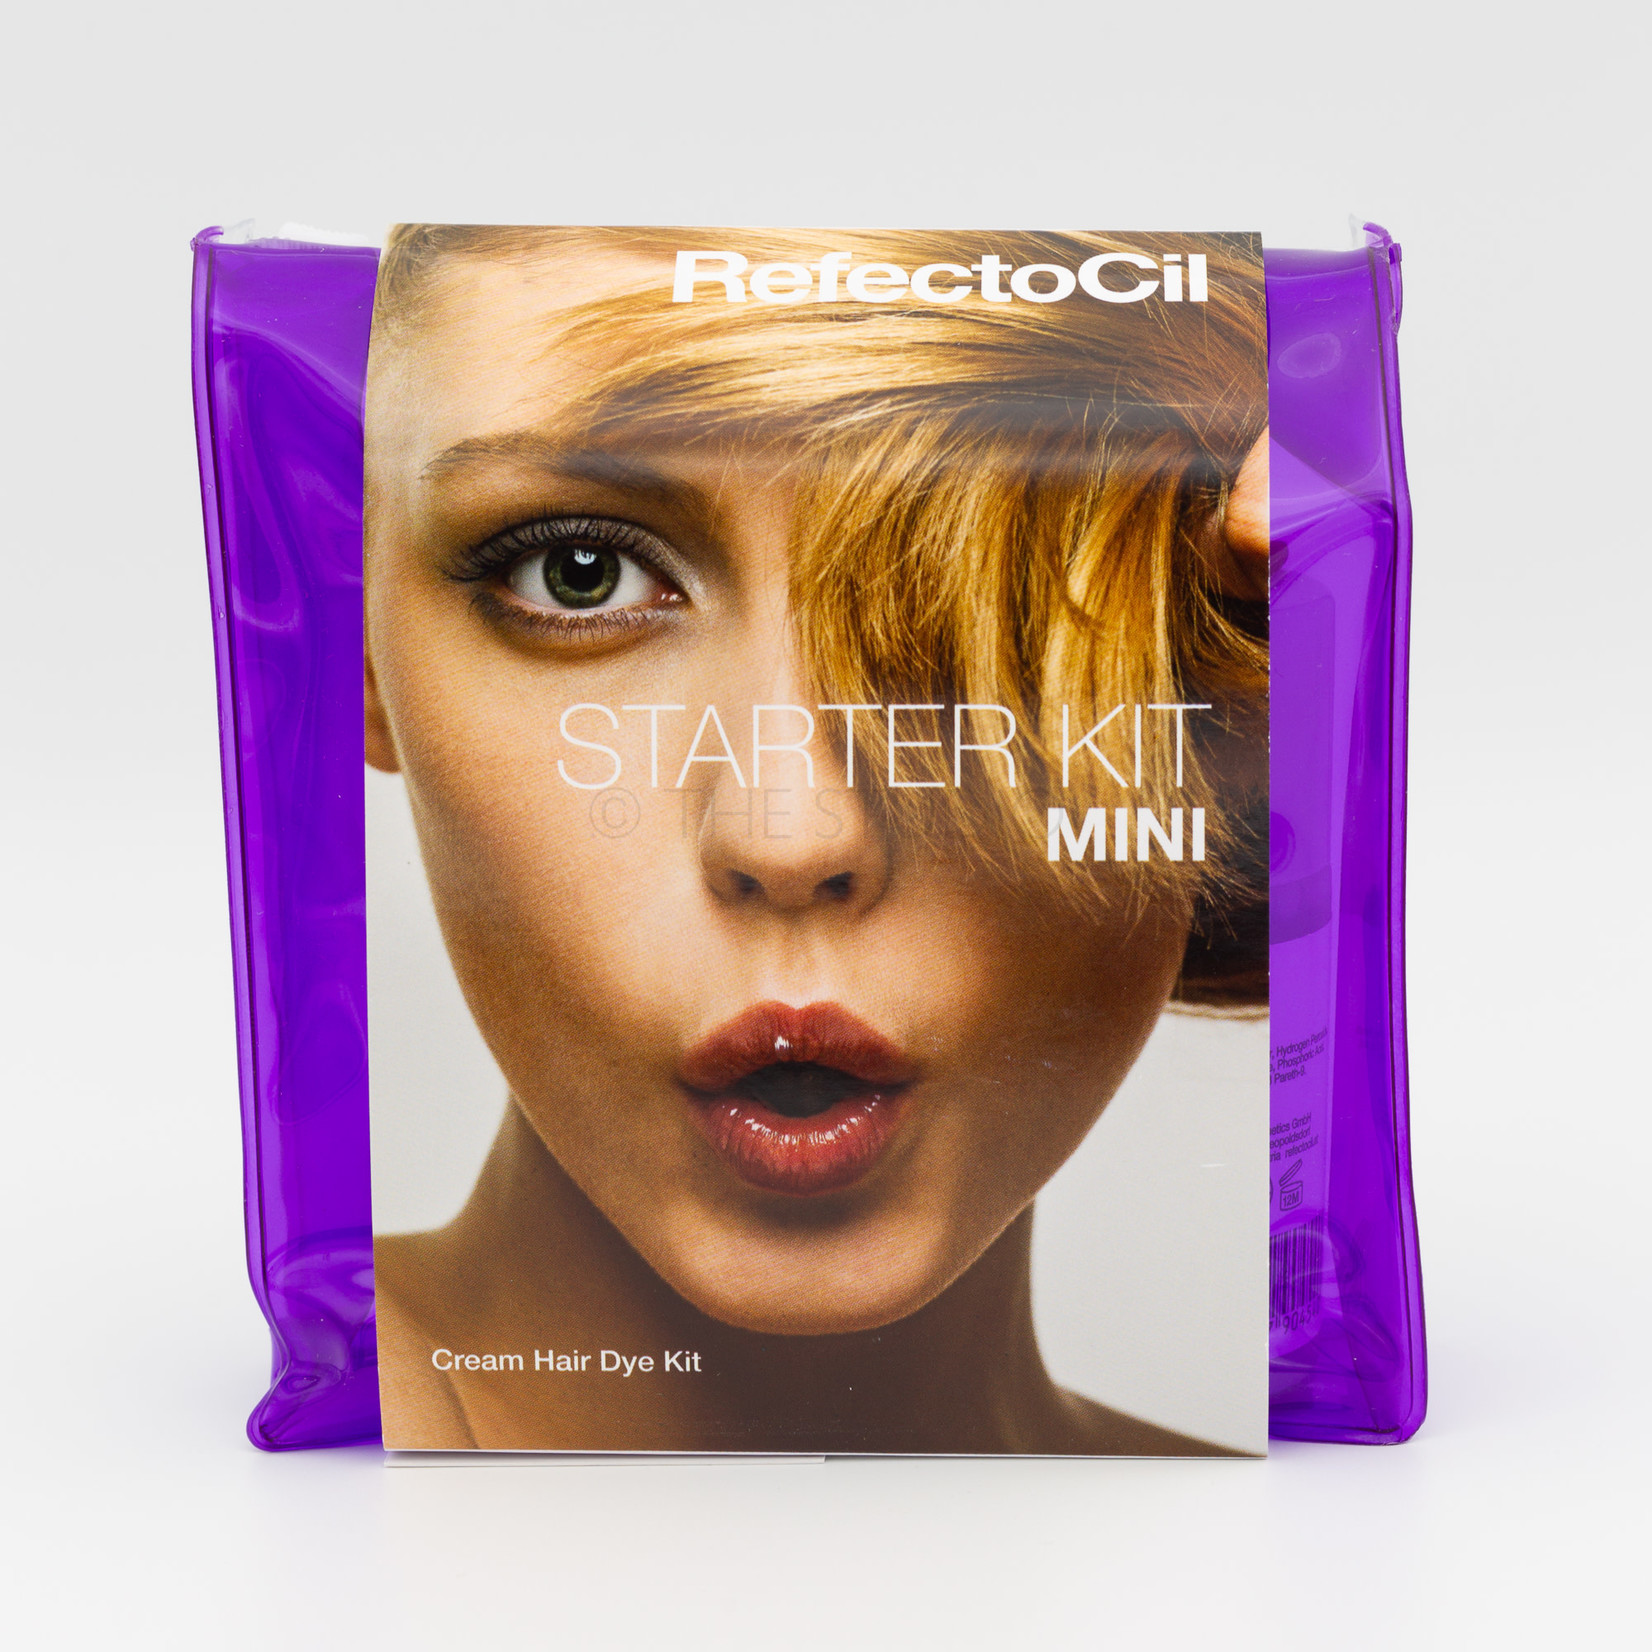 RefectoCil RefectoCil - Mini Starter Kit